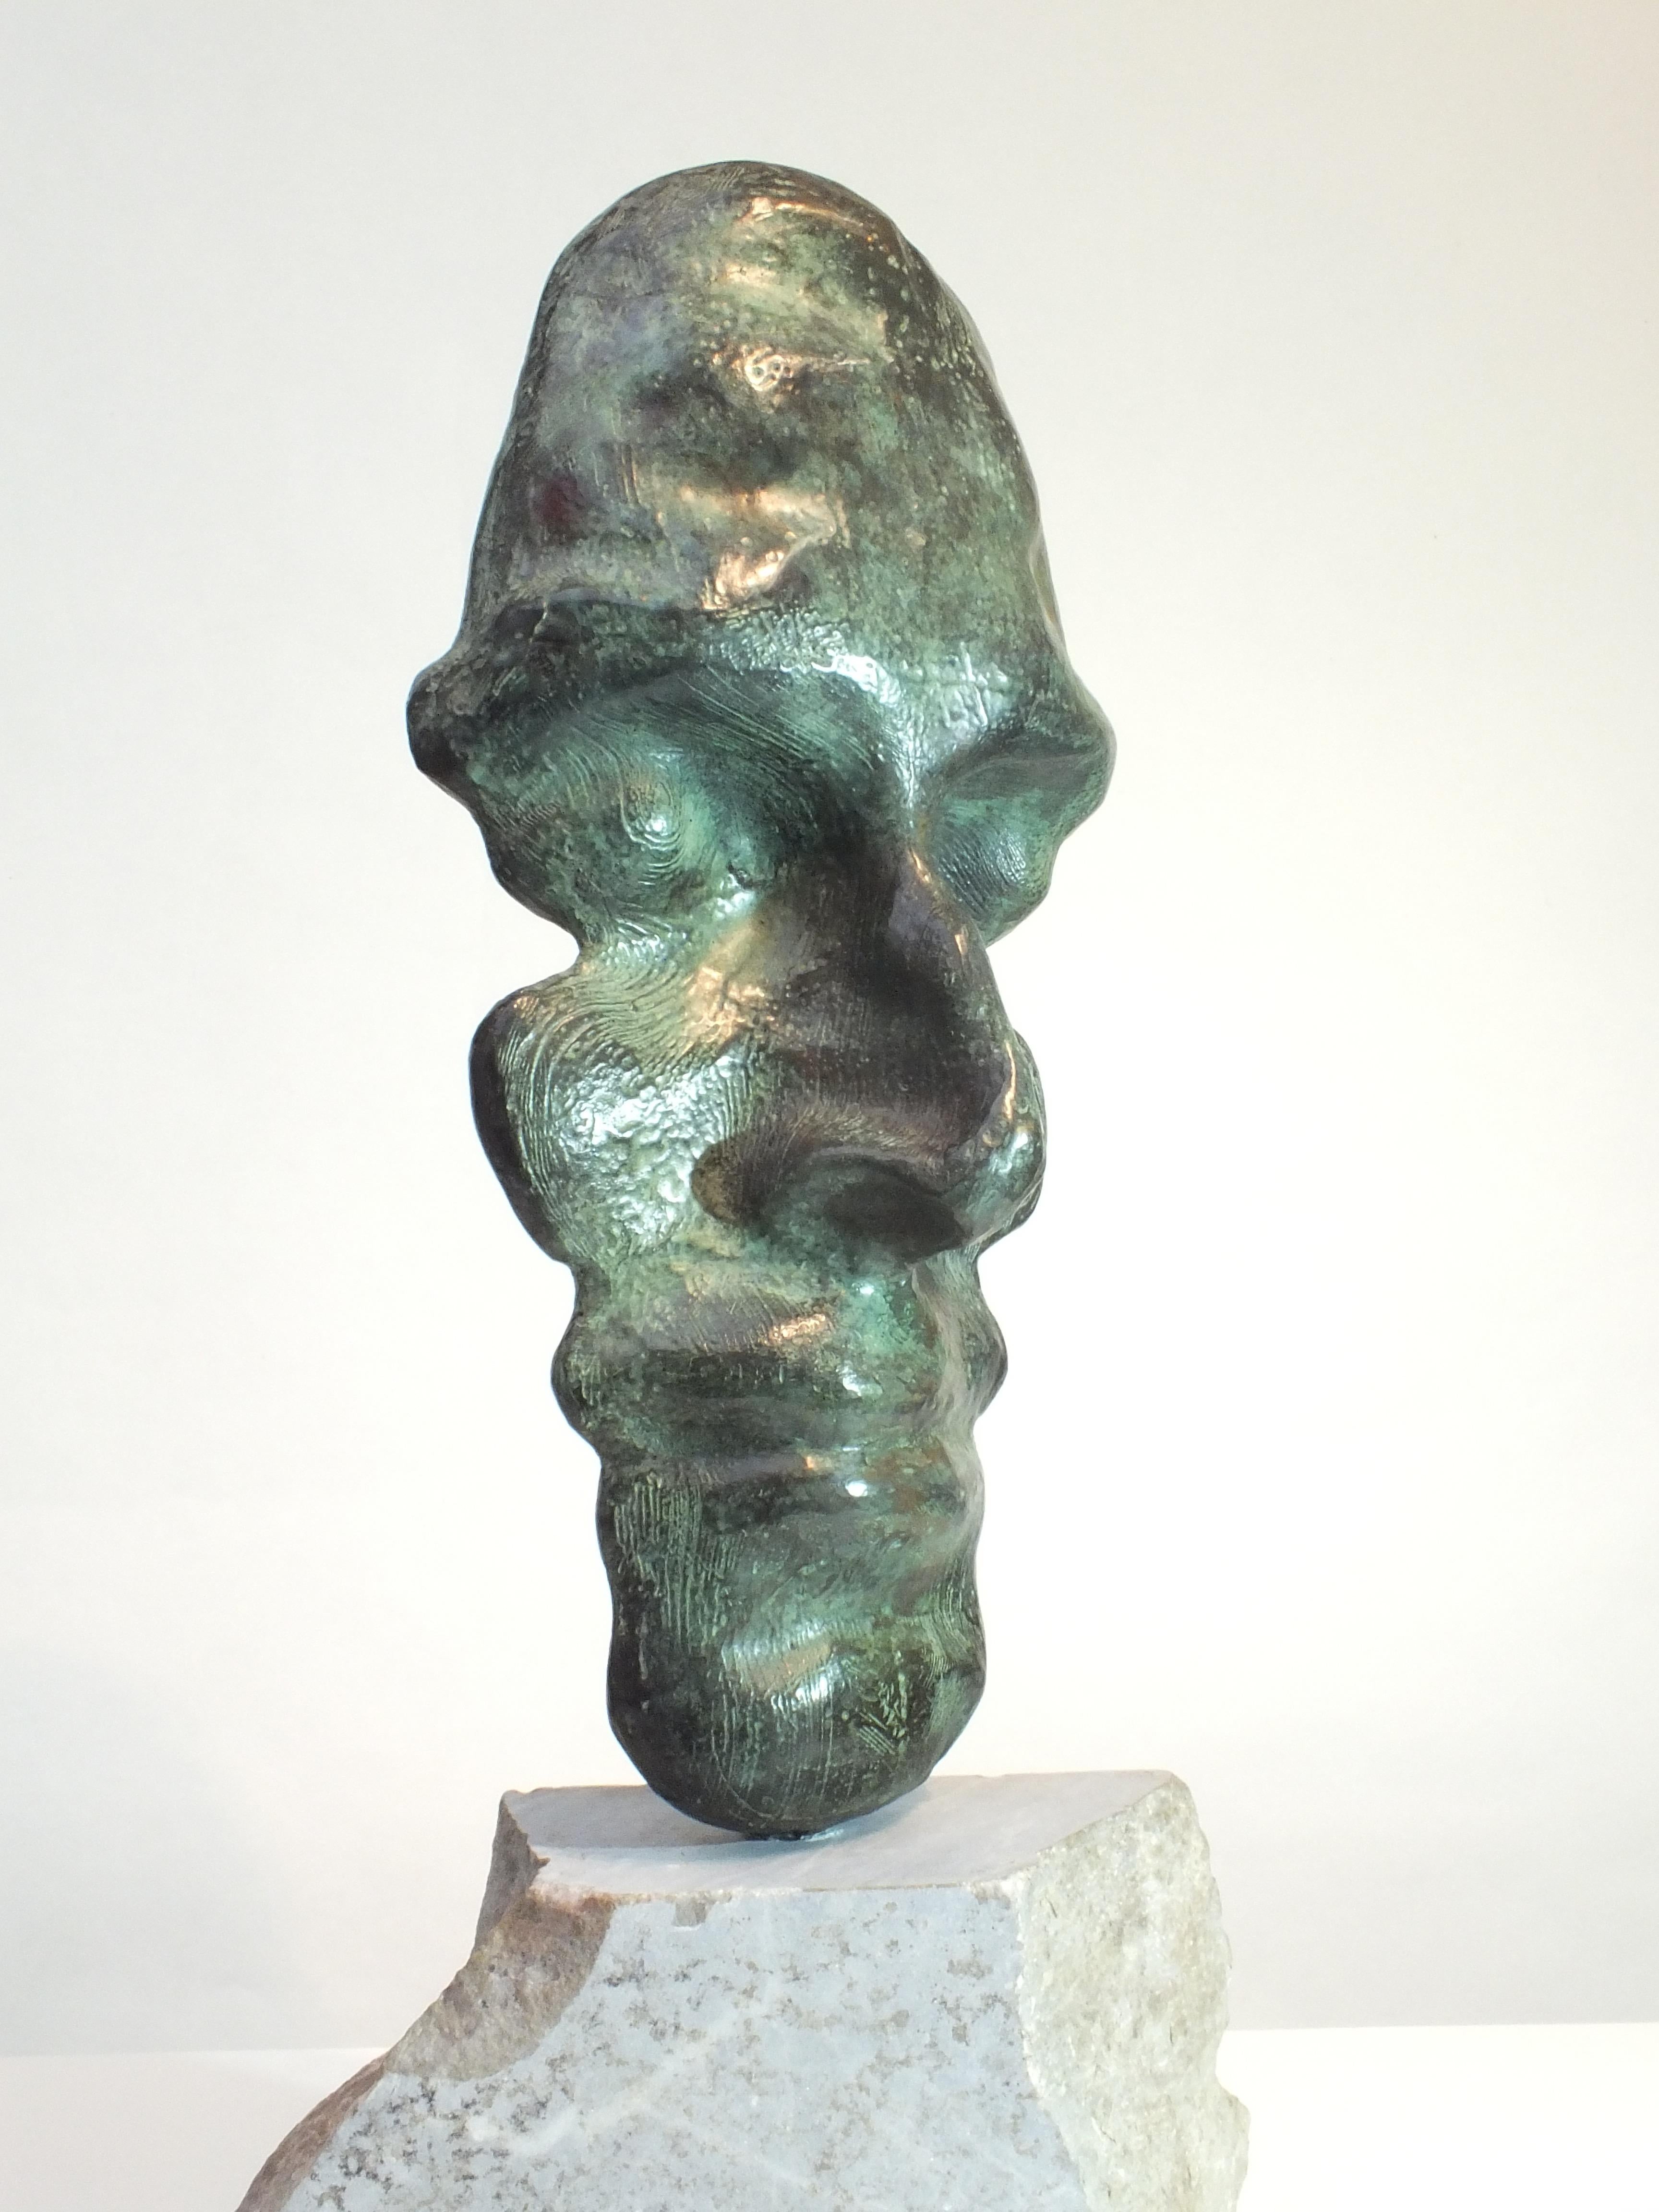 Tim Rawlins Nude Sculpture - Witness, Unique Contemporary Cast Bronze Sculpture